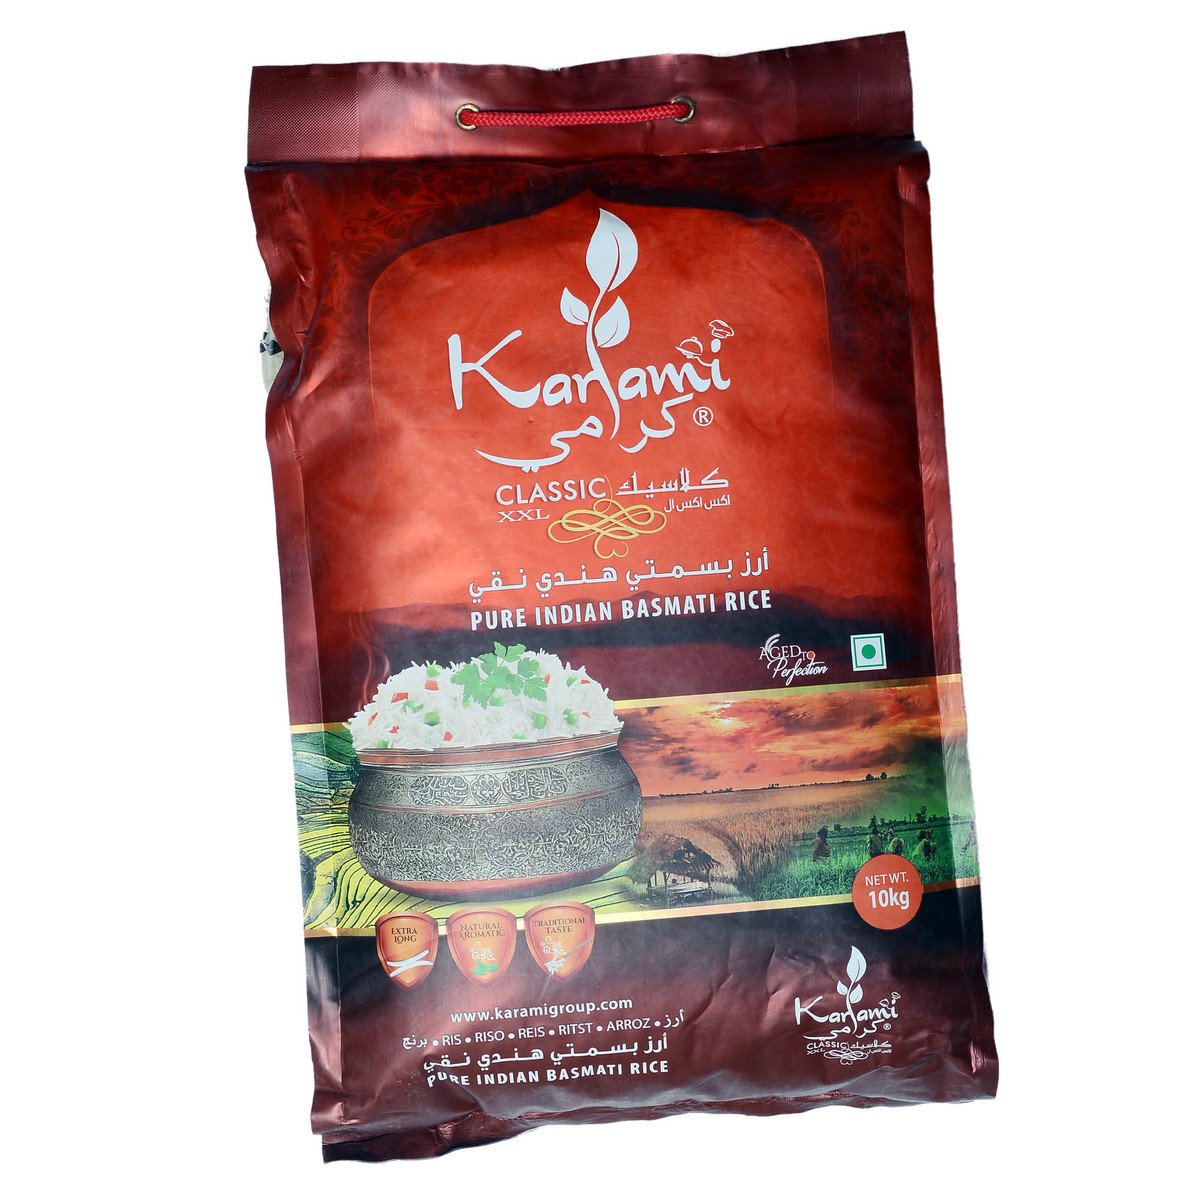 Karami Classic Basmati Rice 10kg